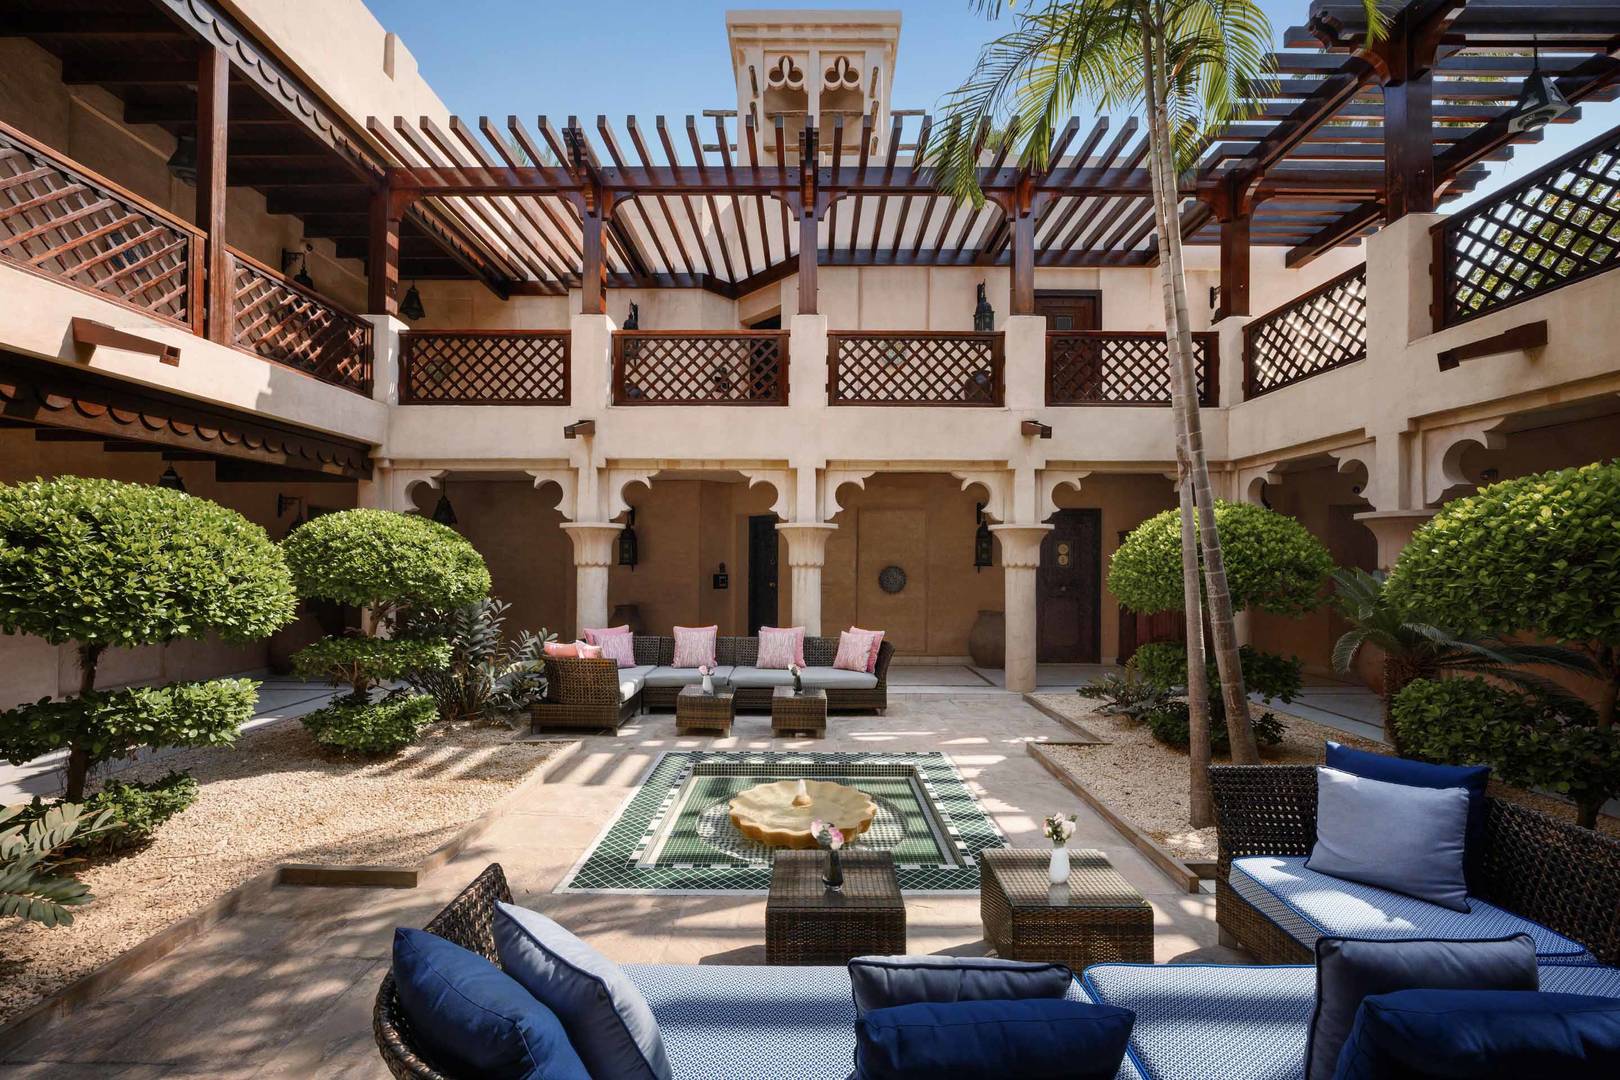 The courtyard of an Arabian summerhouse at Jumeirah Dar Al Masyaf